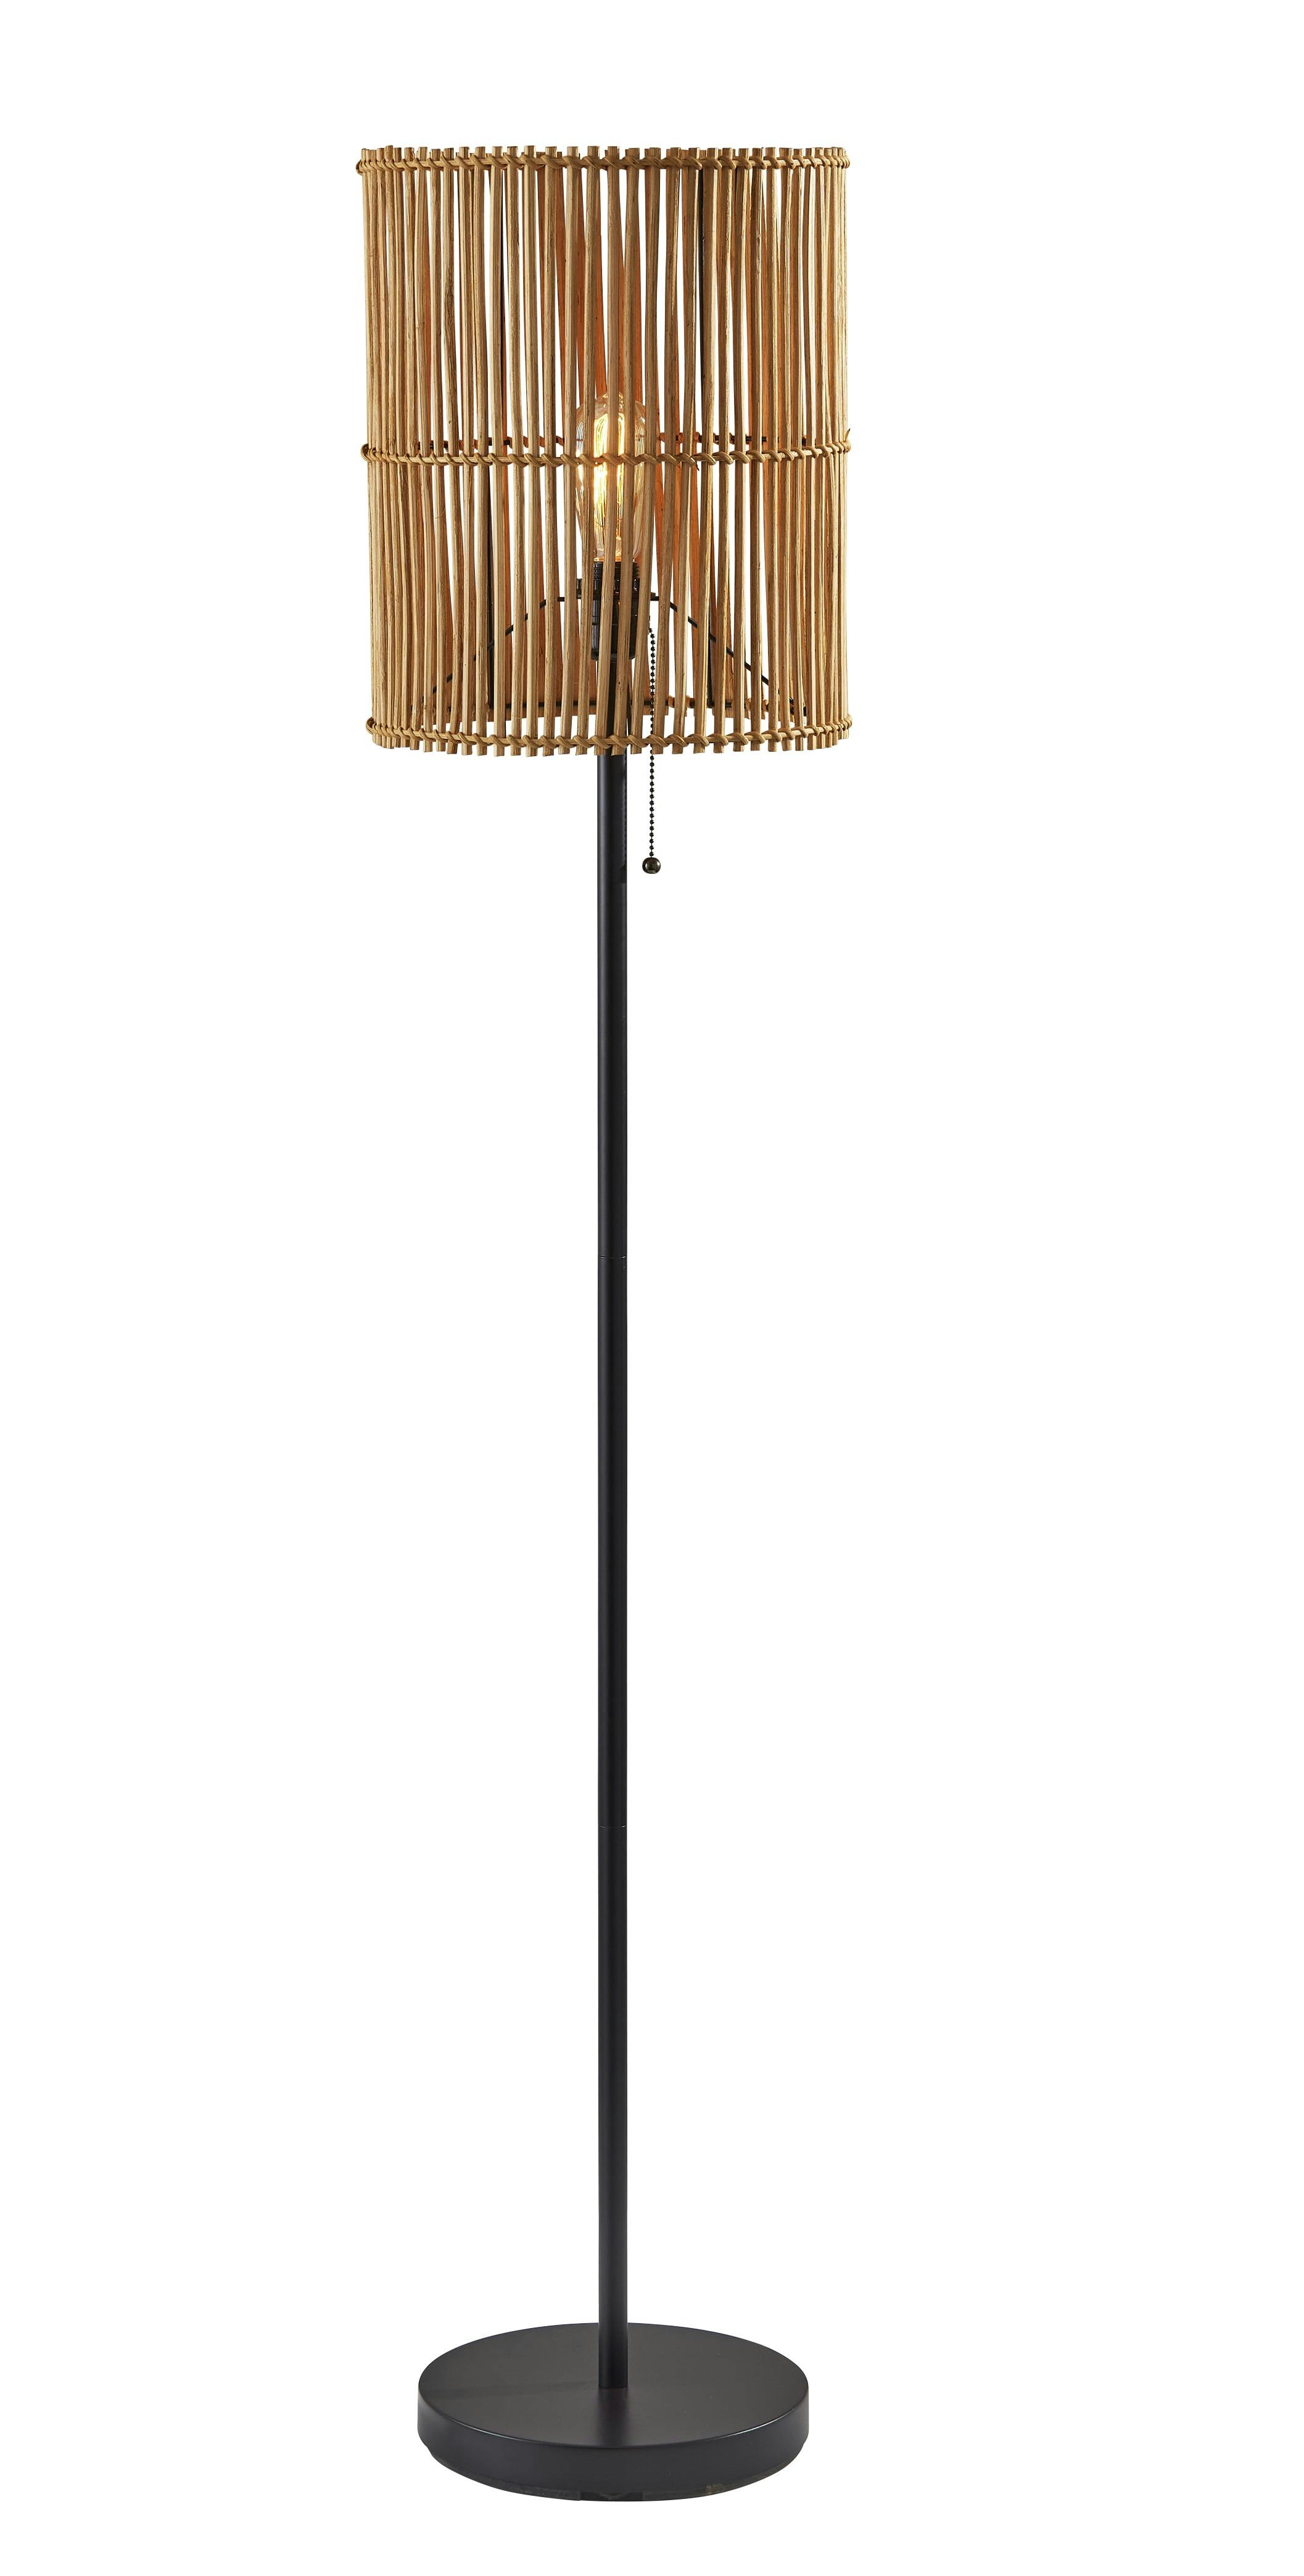 Cabana 58'' Dark Bronze and Natural Rattan Floor Lamp with Amber Light